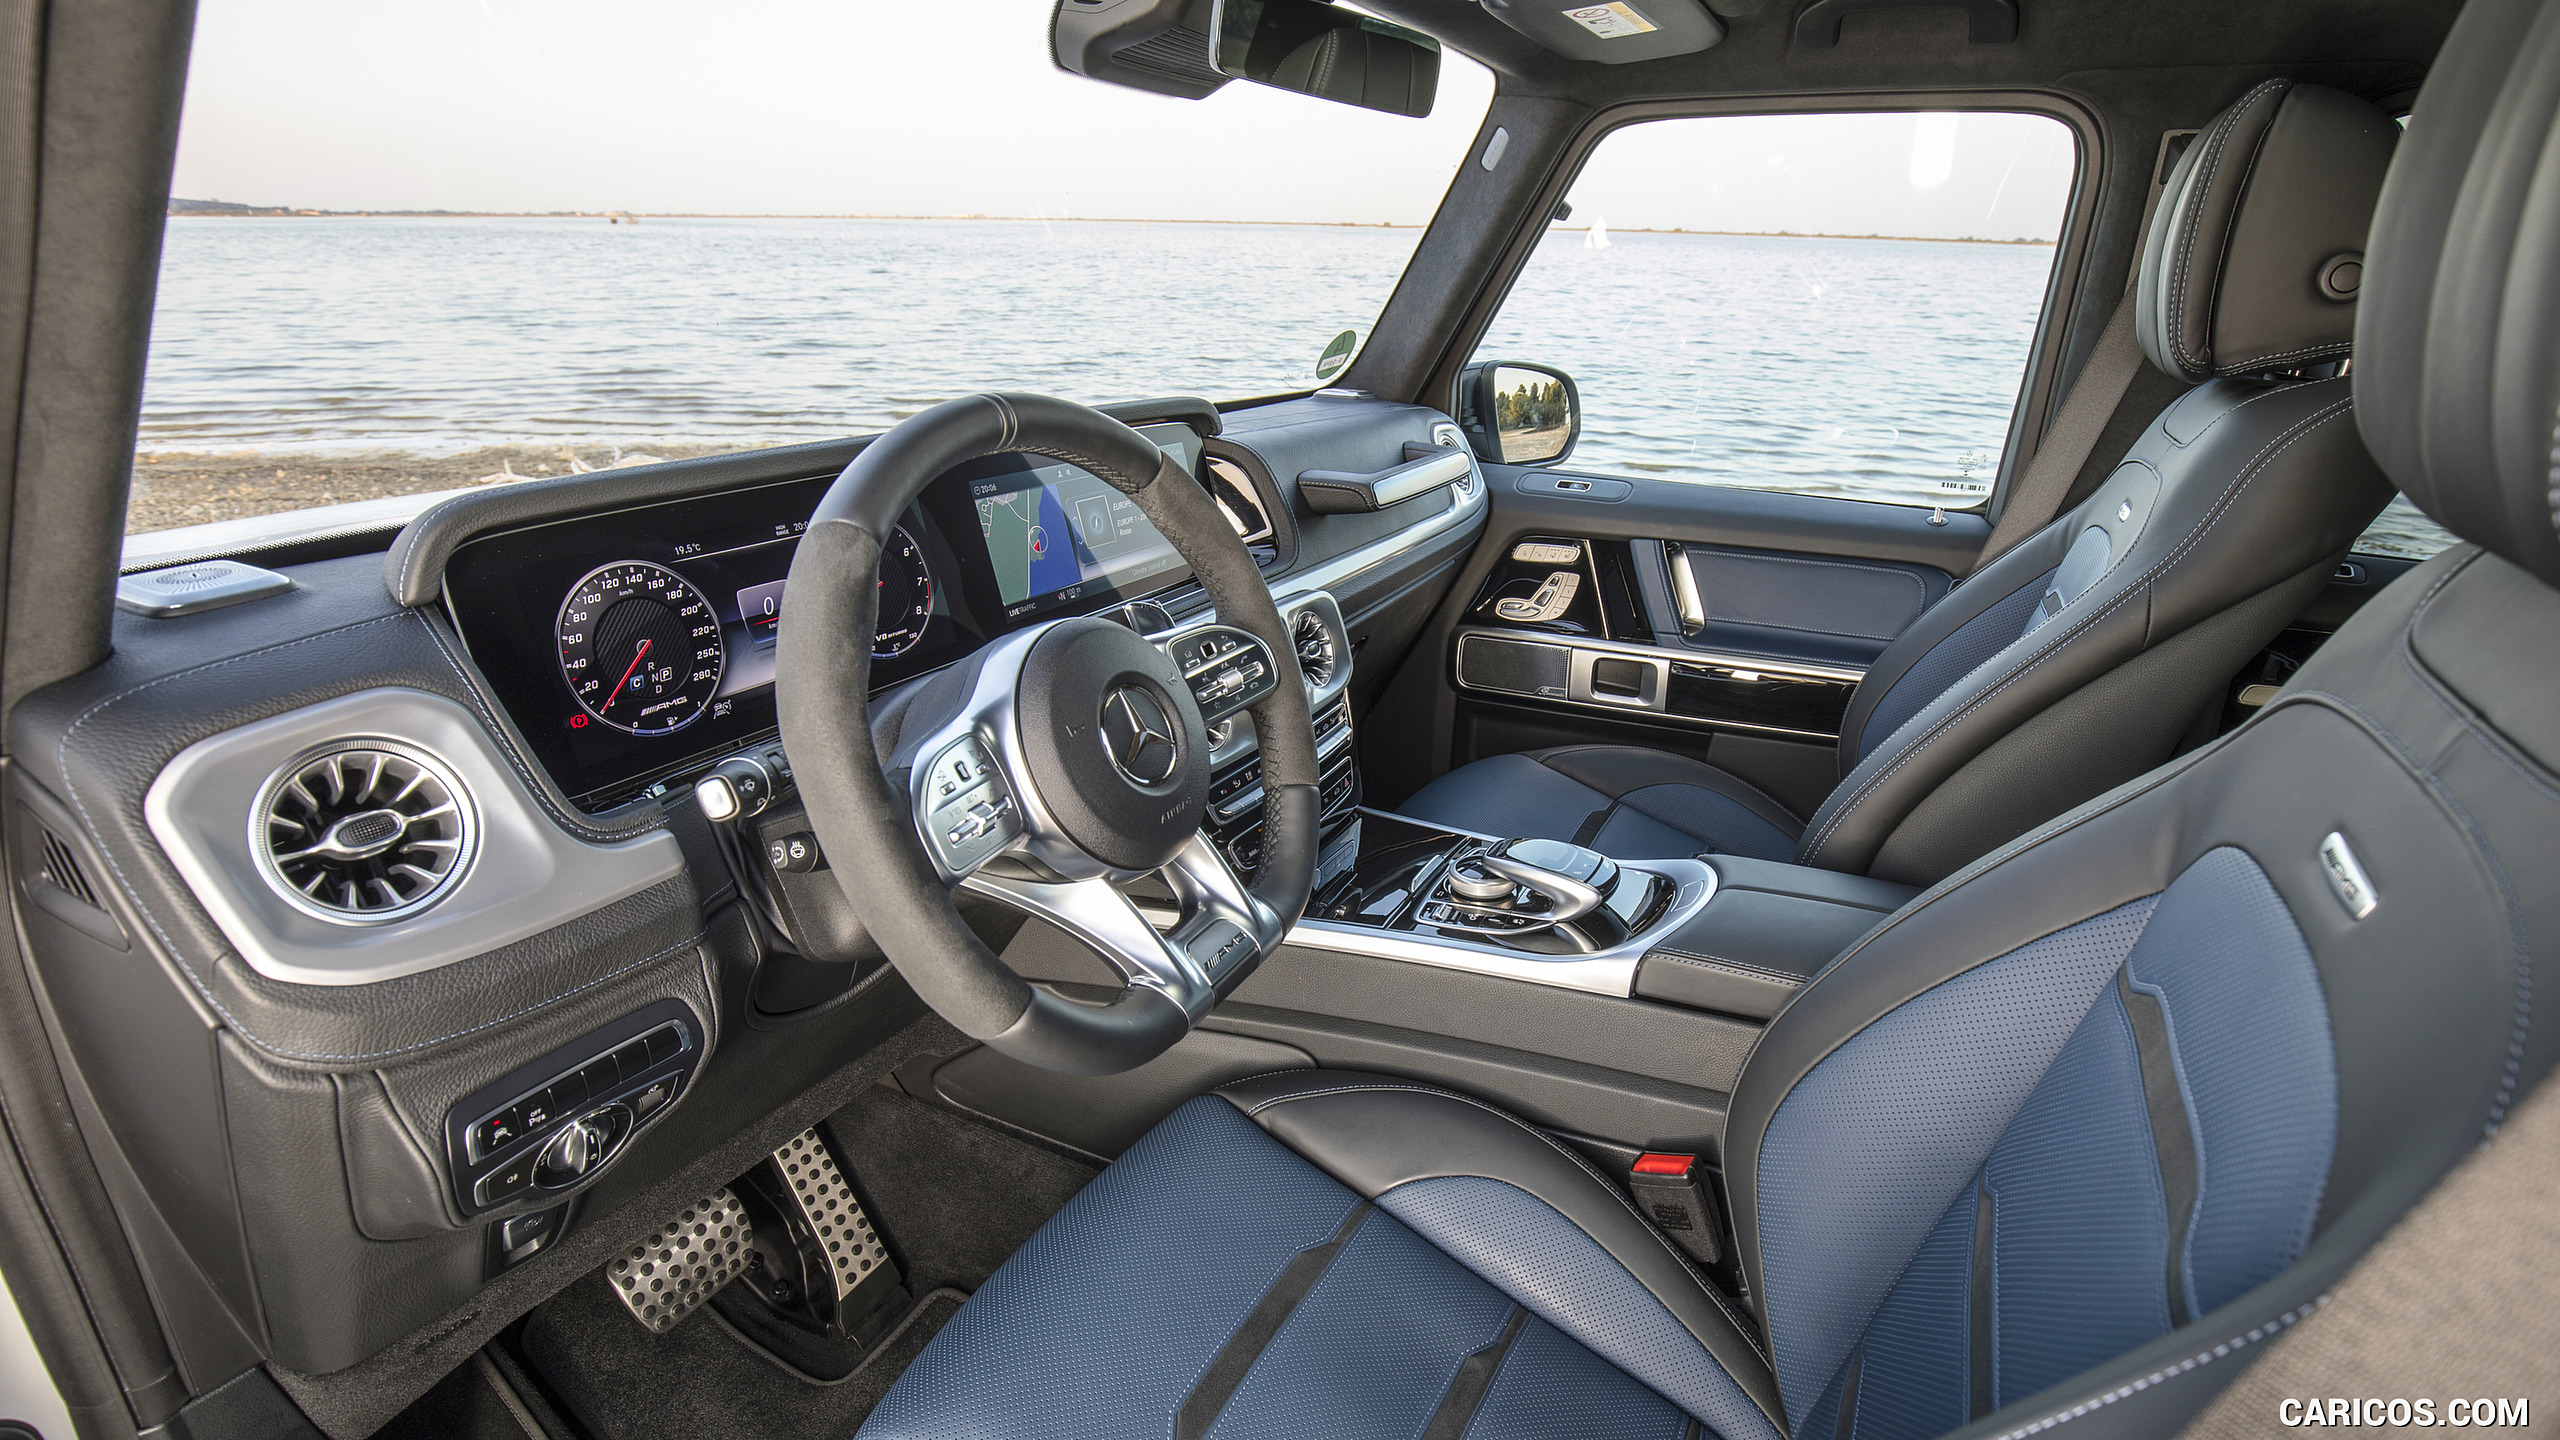 2019 Mercedes-AMG G63 - Interior, #123 of 452